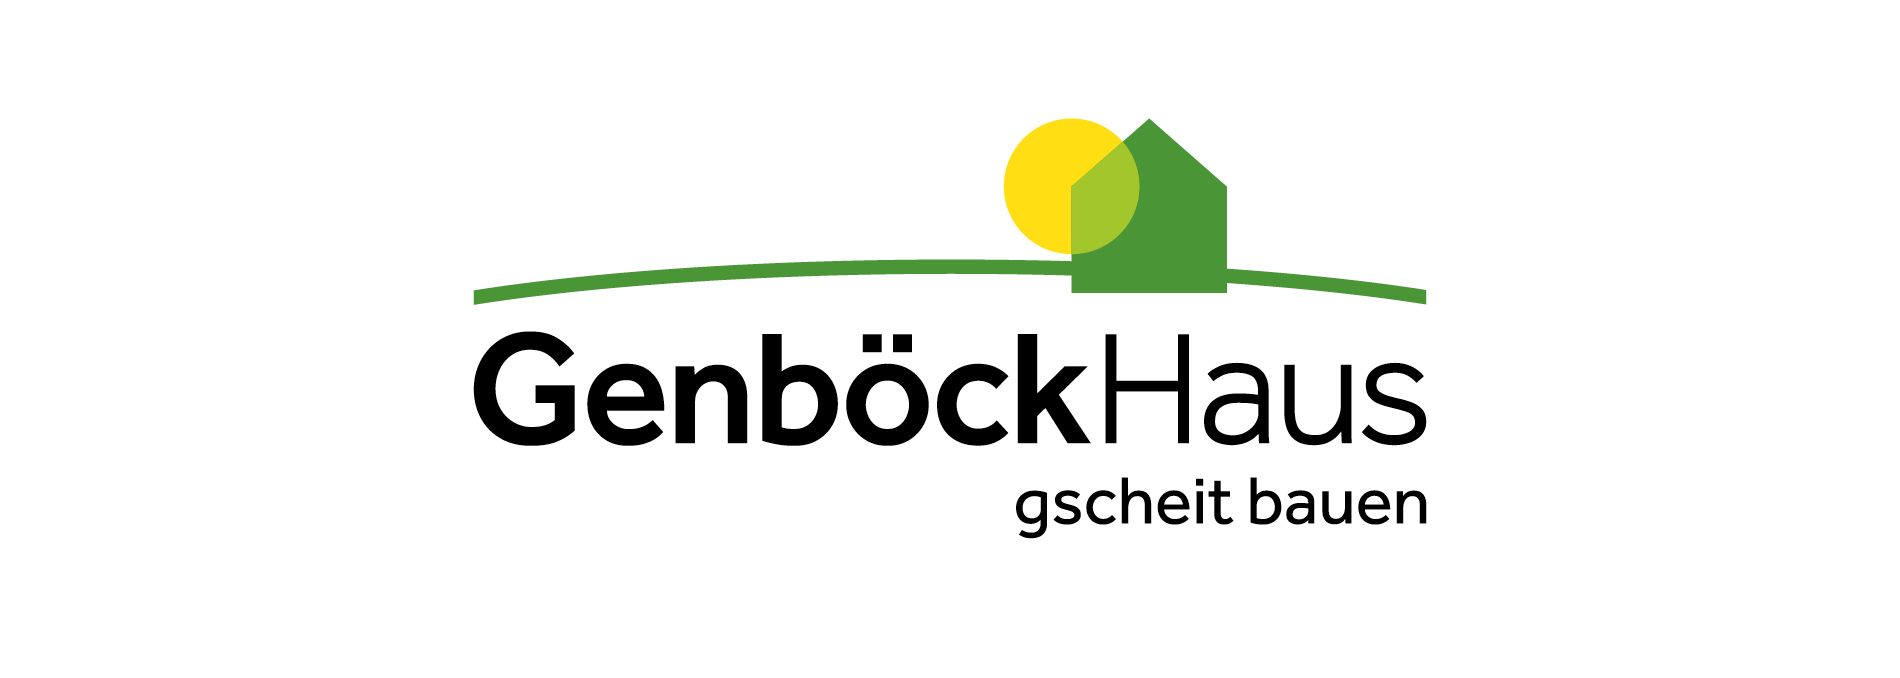 Bilder_DJW_Genboeck_logo